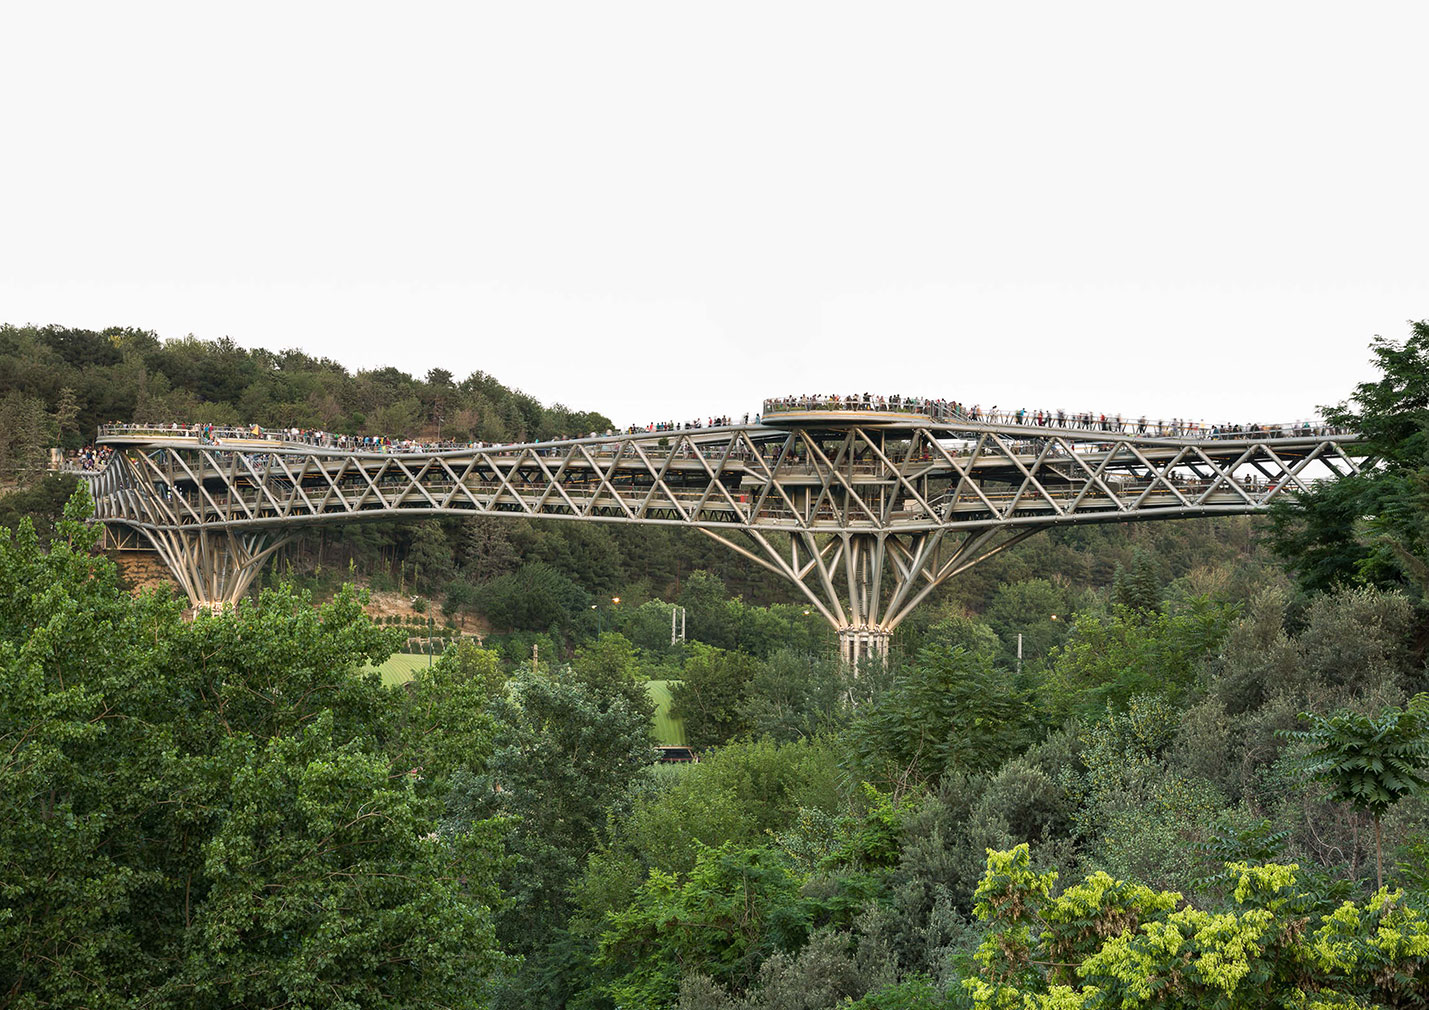 Tabiat Bridge in Tehran, Iran, designed by Leila Araghian